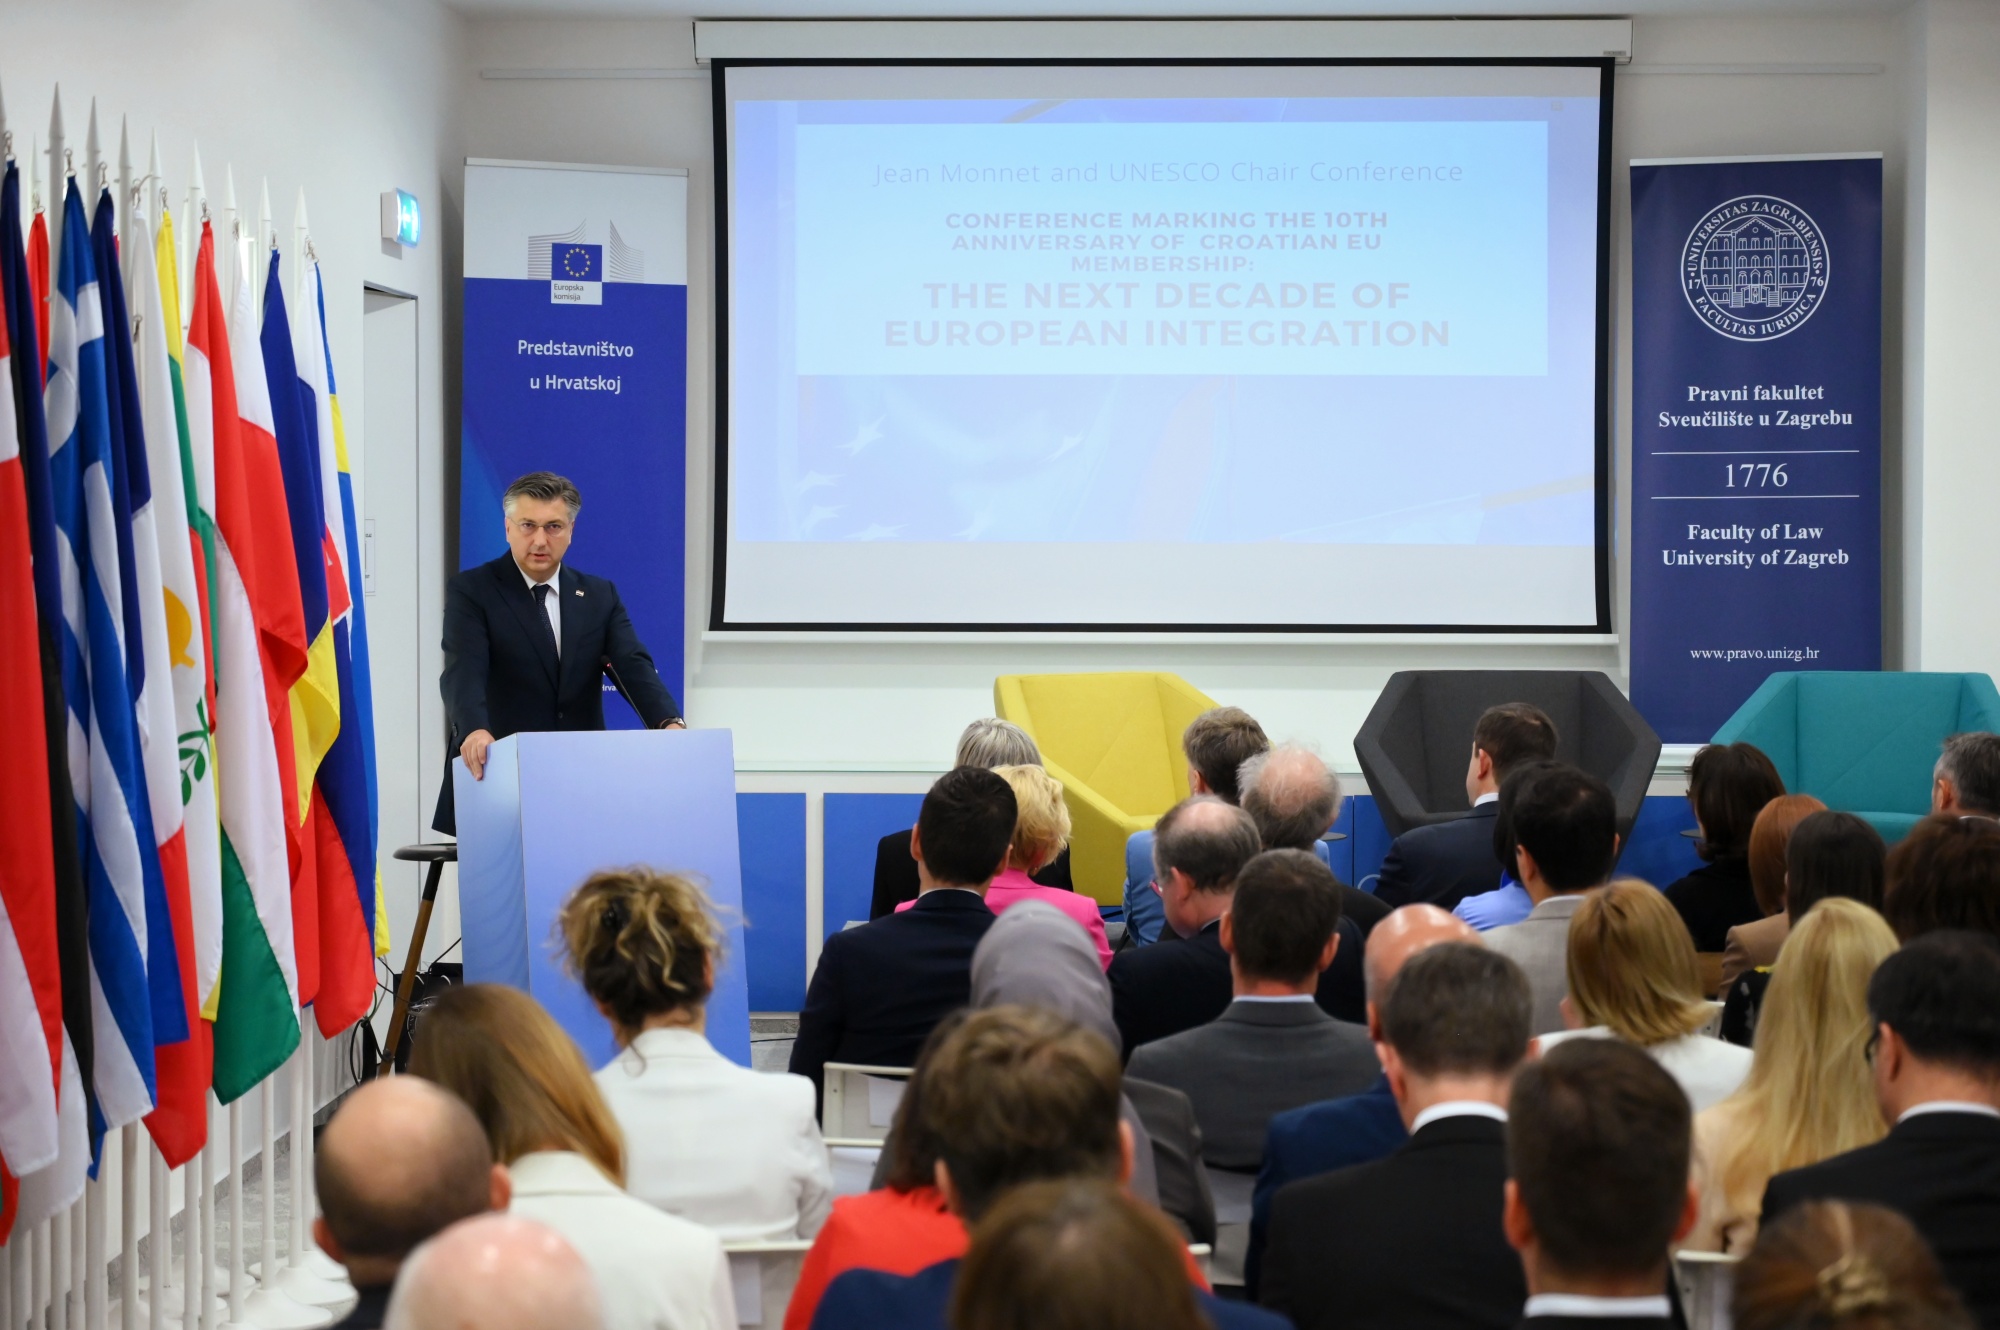 Održana je znanstveno-stručna konferencija “The Next Decade of European Integration”